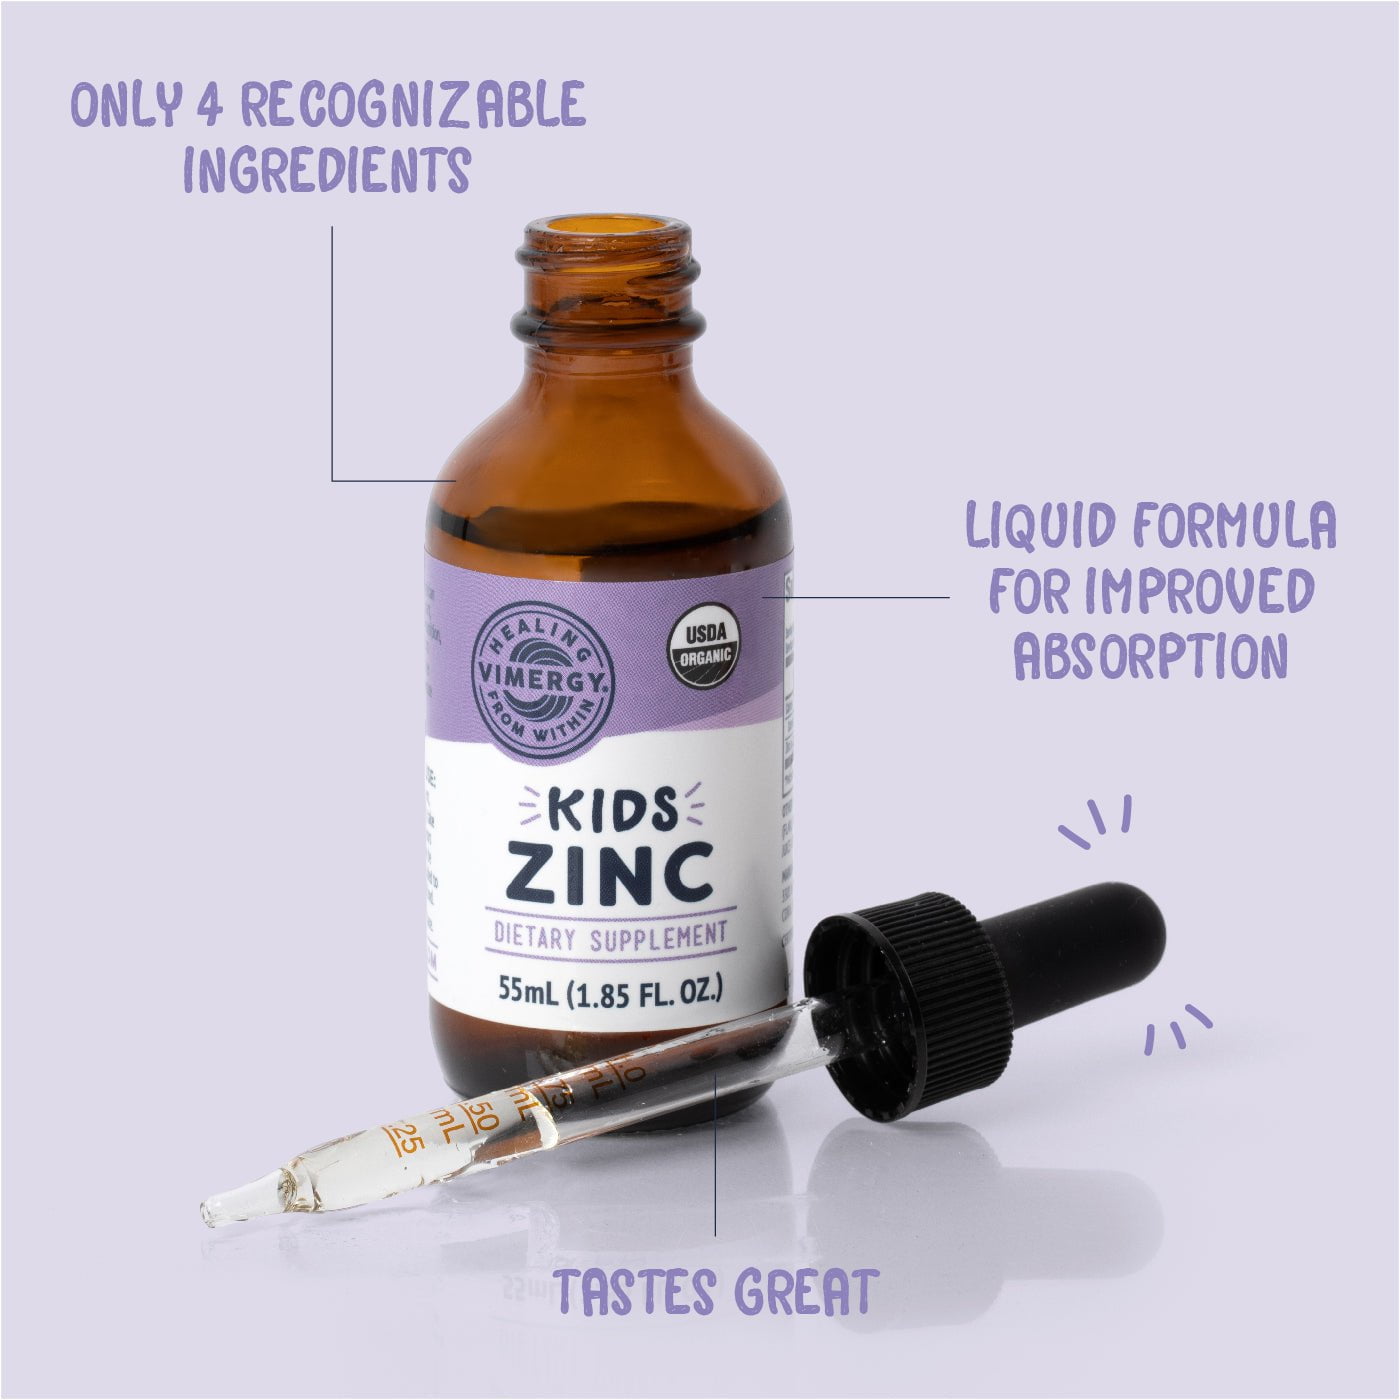 Kids Organic Liquid Zinc Vimergy Supplements Vitamins